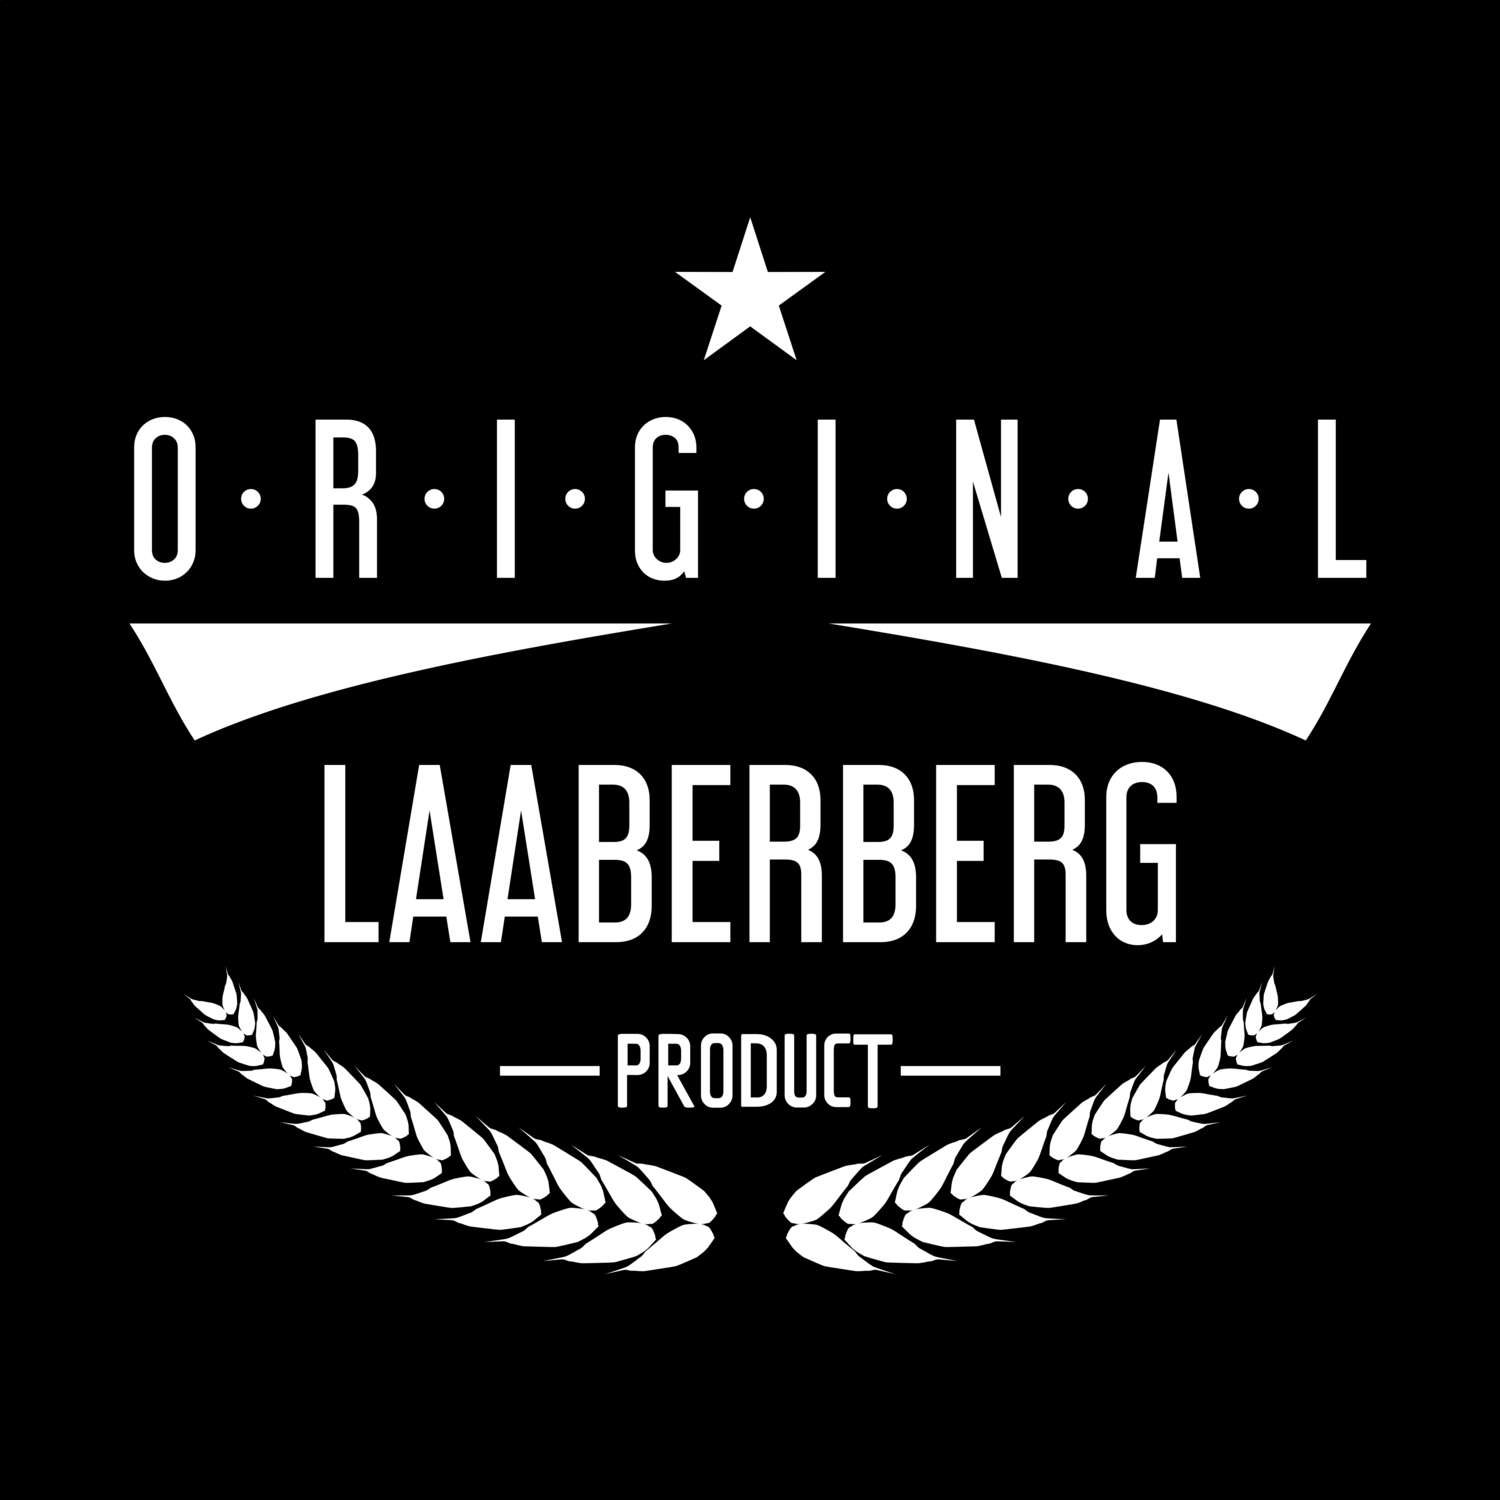 Laaberberg T-Shirt »Original Product«